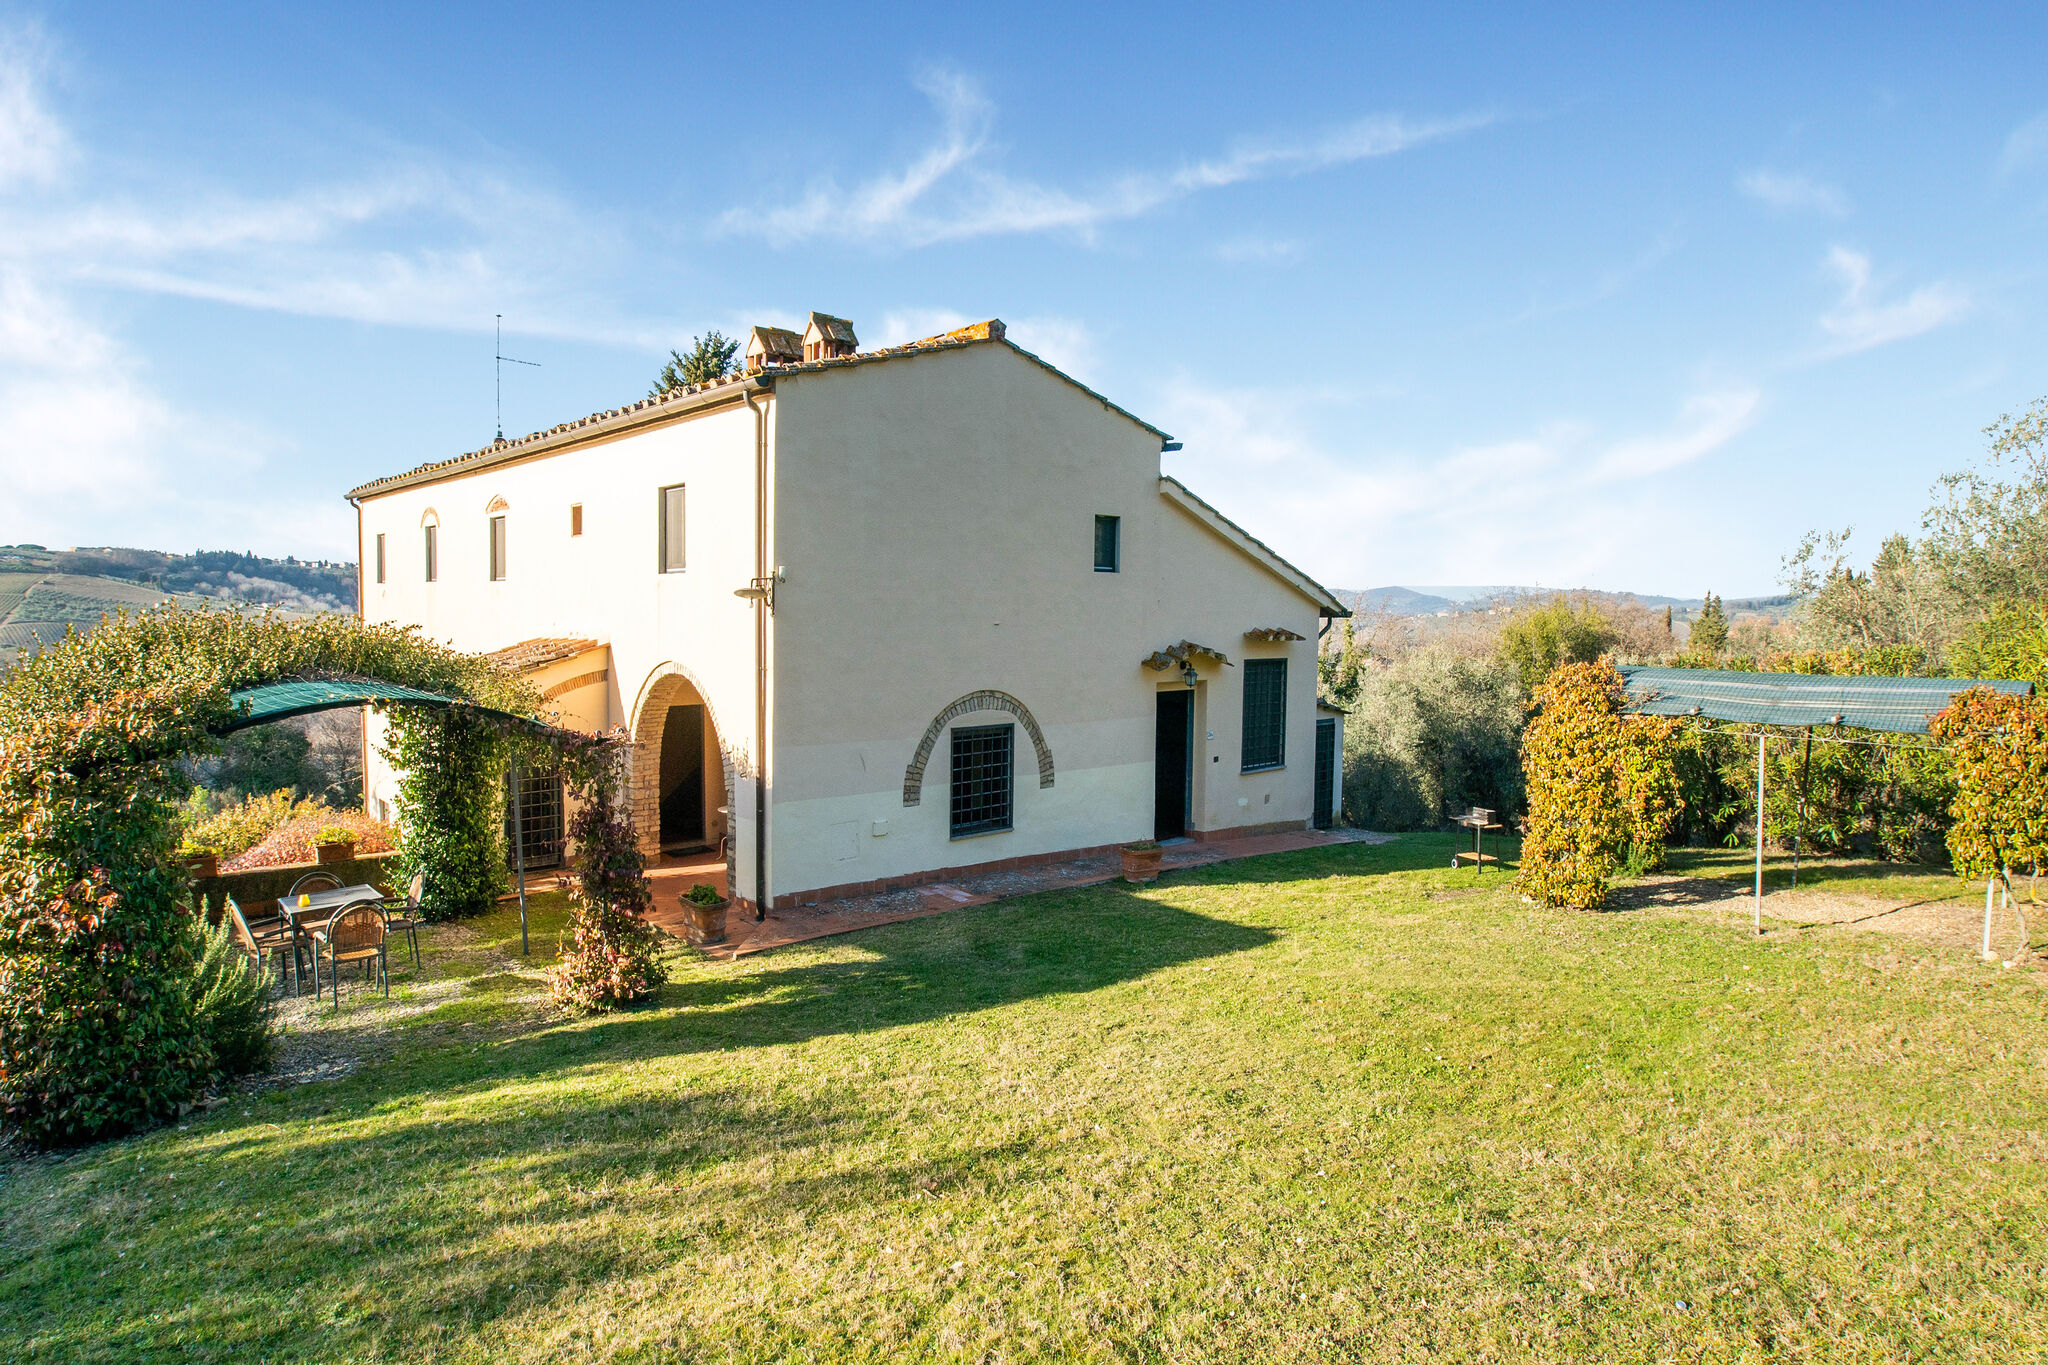 Villa San Casciano in Val di Pesa, située dans les collines de Toscane.